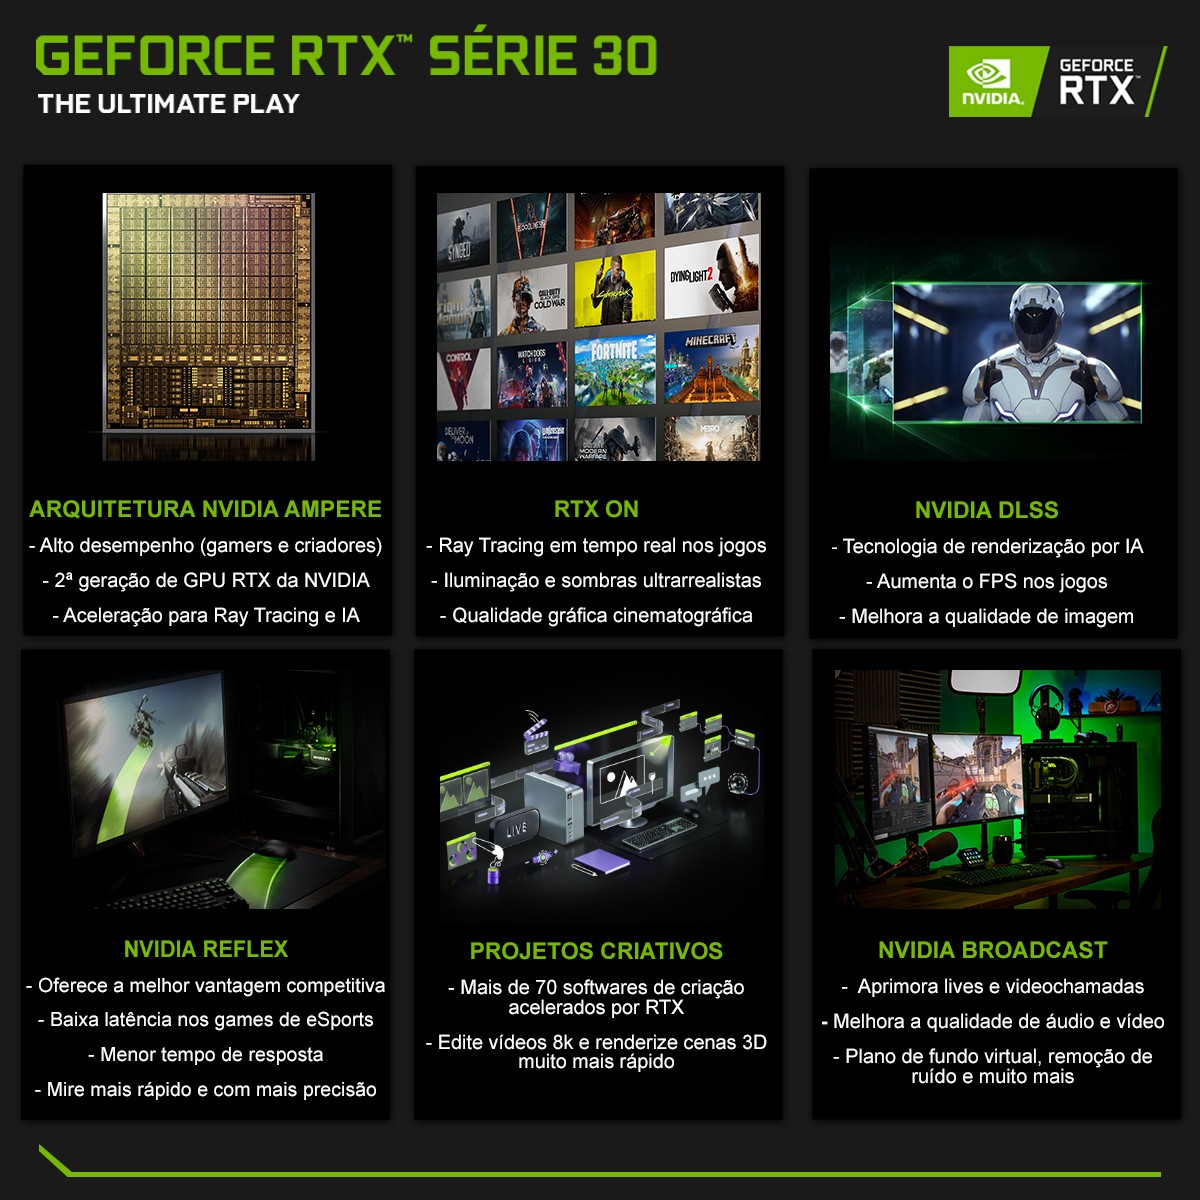 Placa de Vídeo Gainward, GeForce RTX 3070 Phoenix GS, 8GB, GDDR6, 256Bit